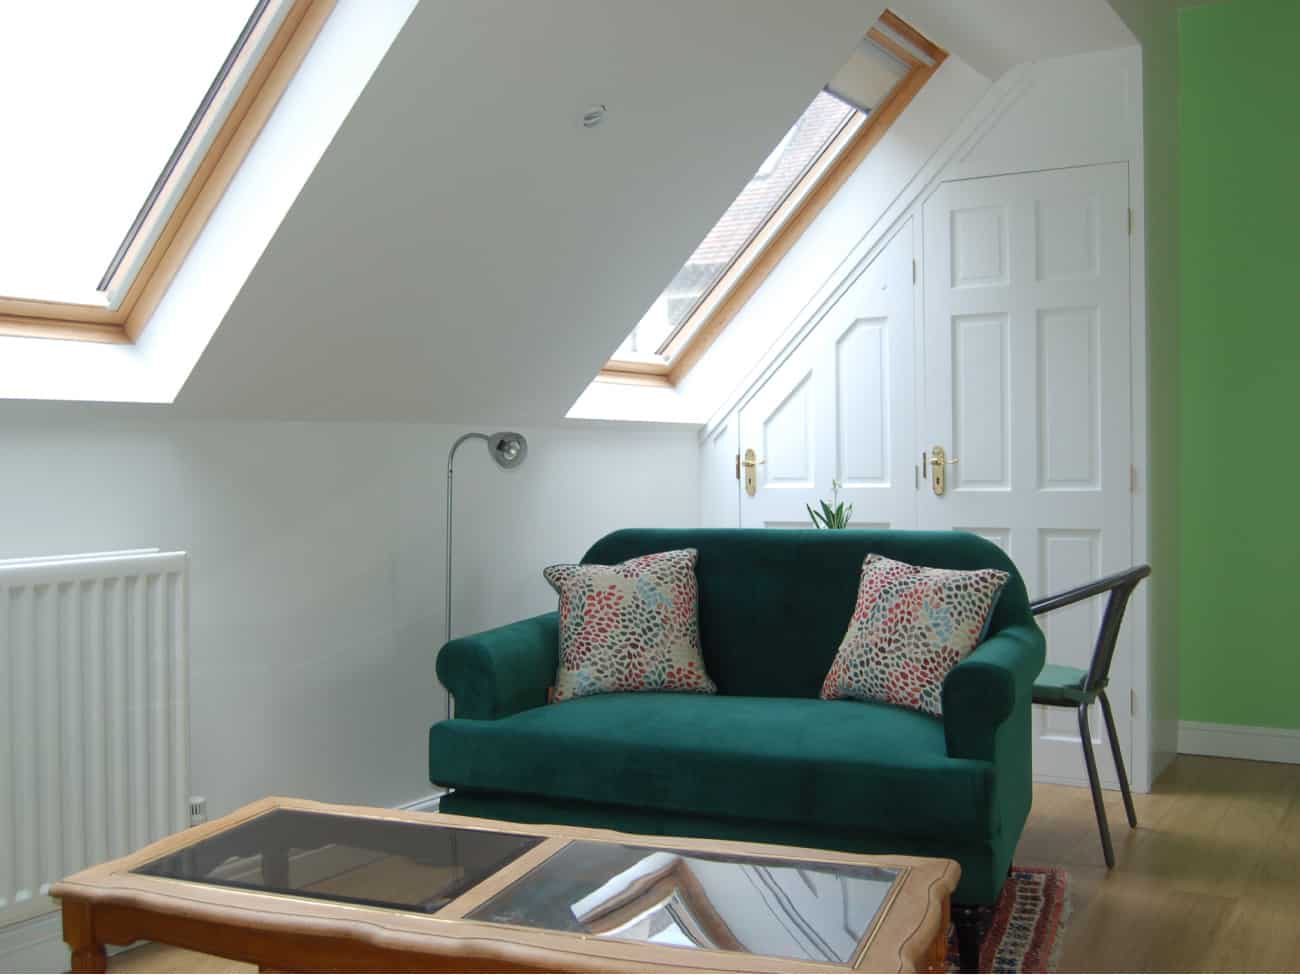 holiday home design in warwickshire skylights seasonal soul home